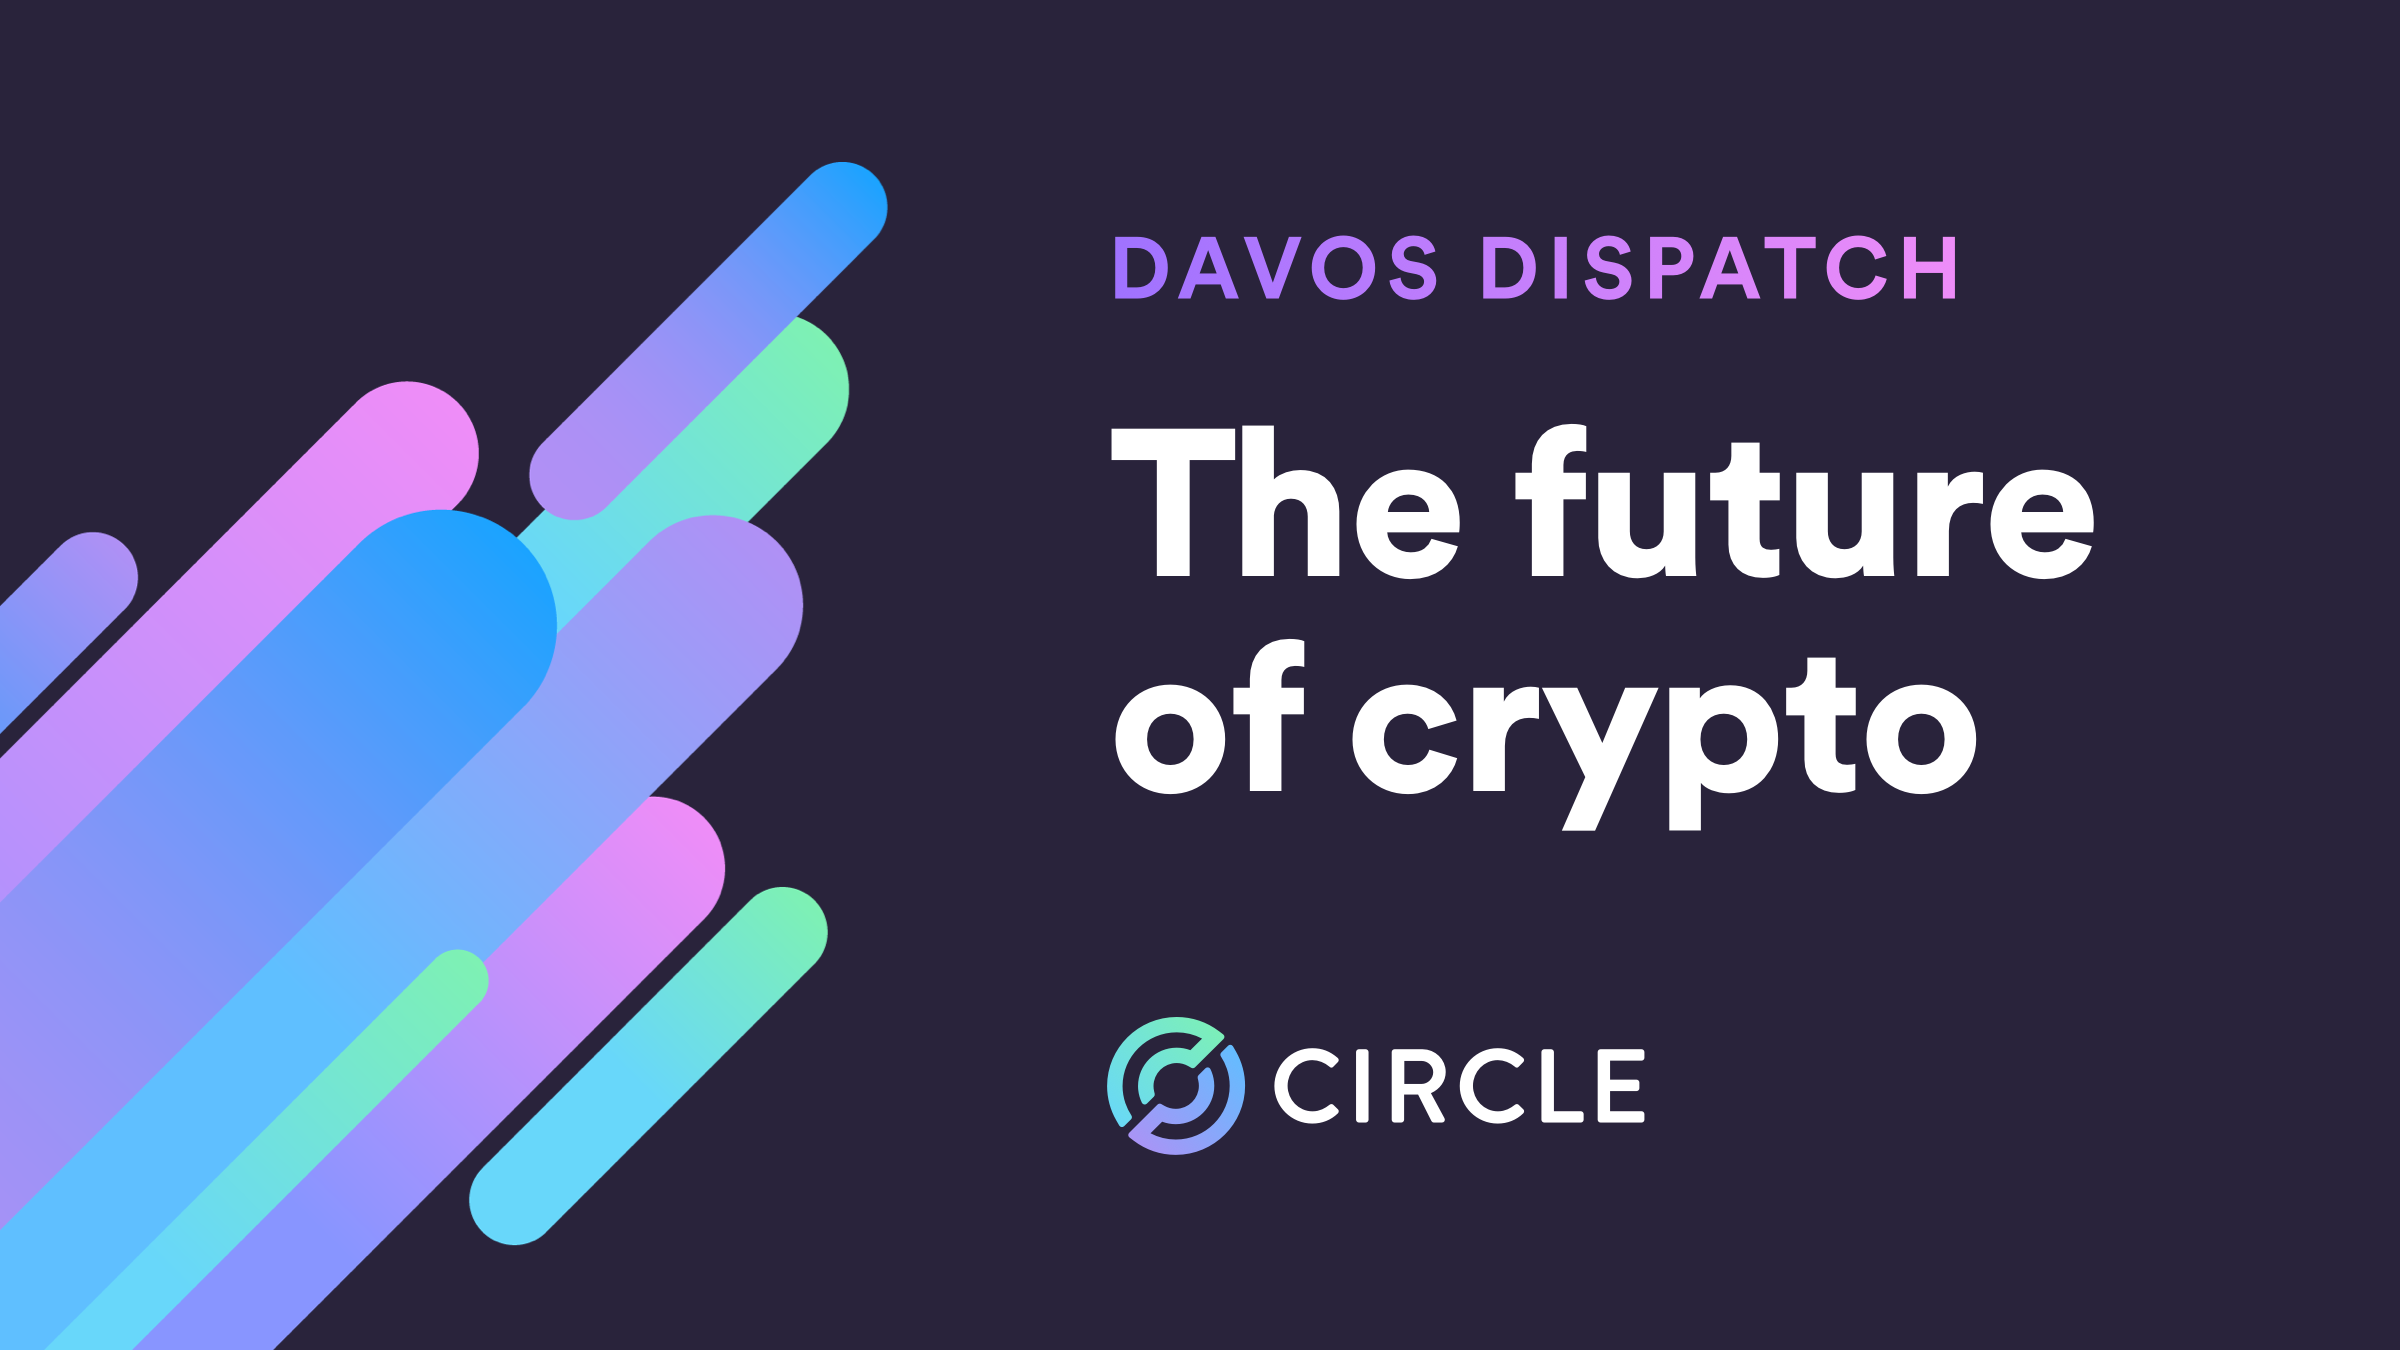 Davos Dispatch / The future of crypto